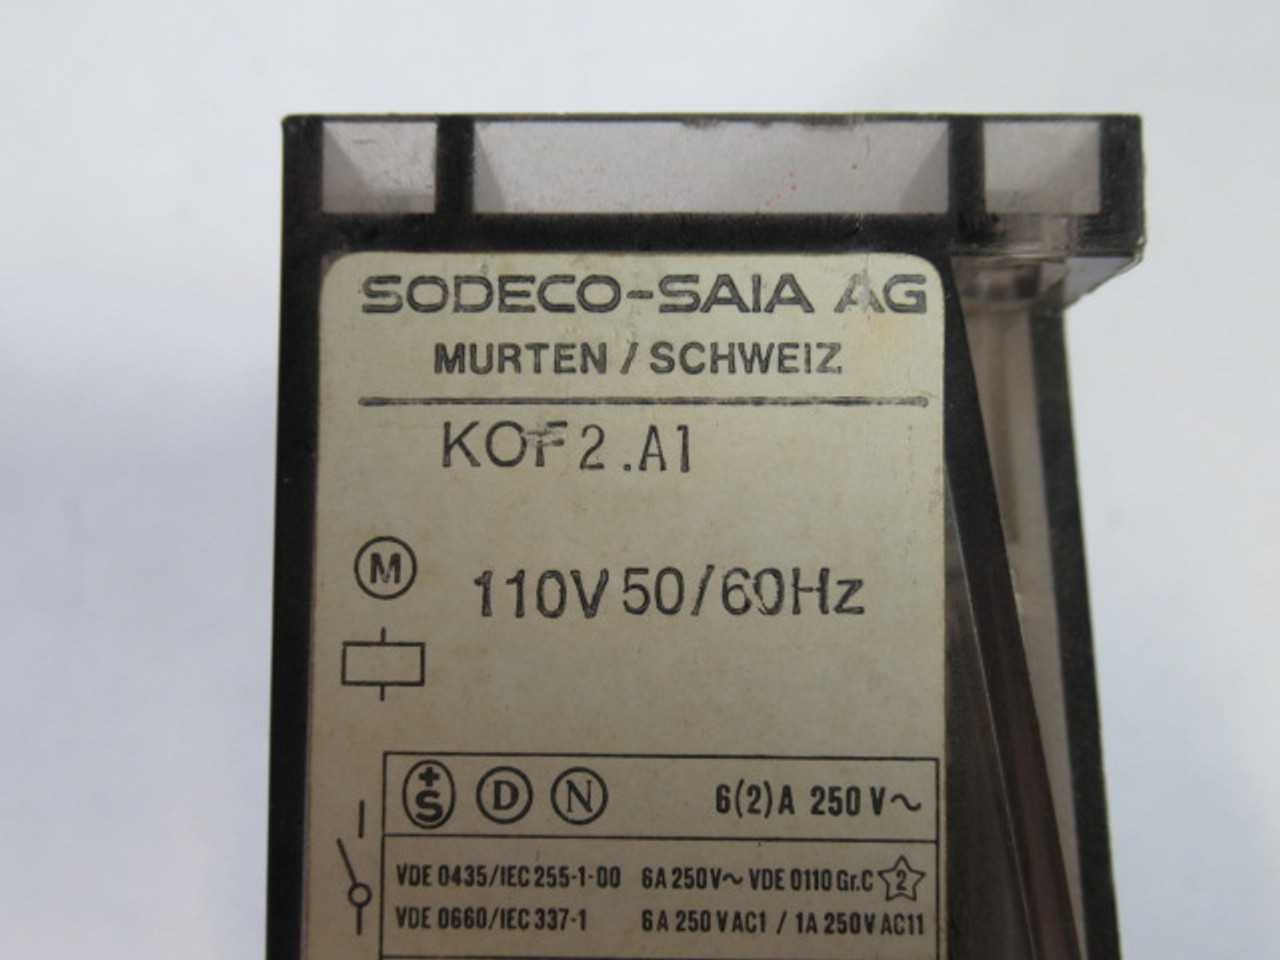 Sodeco-Saia KOF2.A1 Time Delay Relay 110V 50/60Hz MISSING SCREWS USED